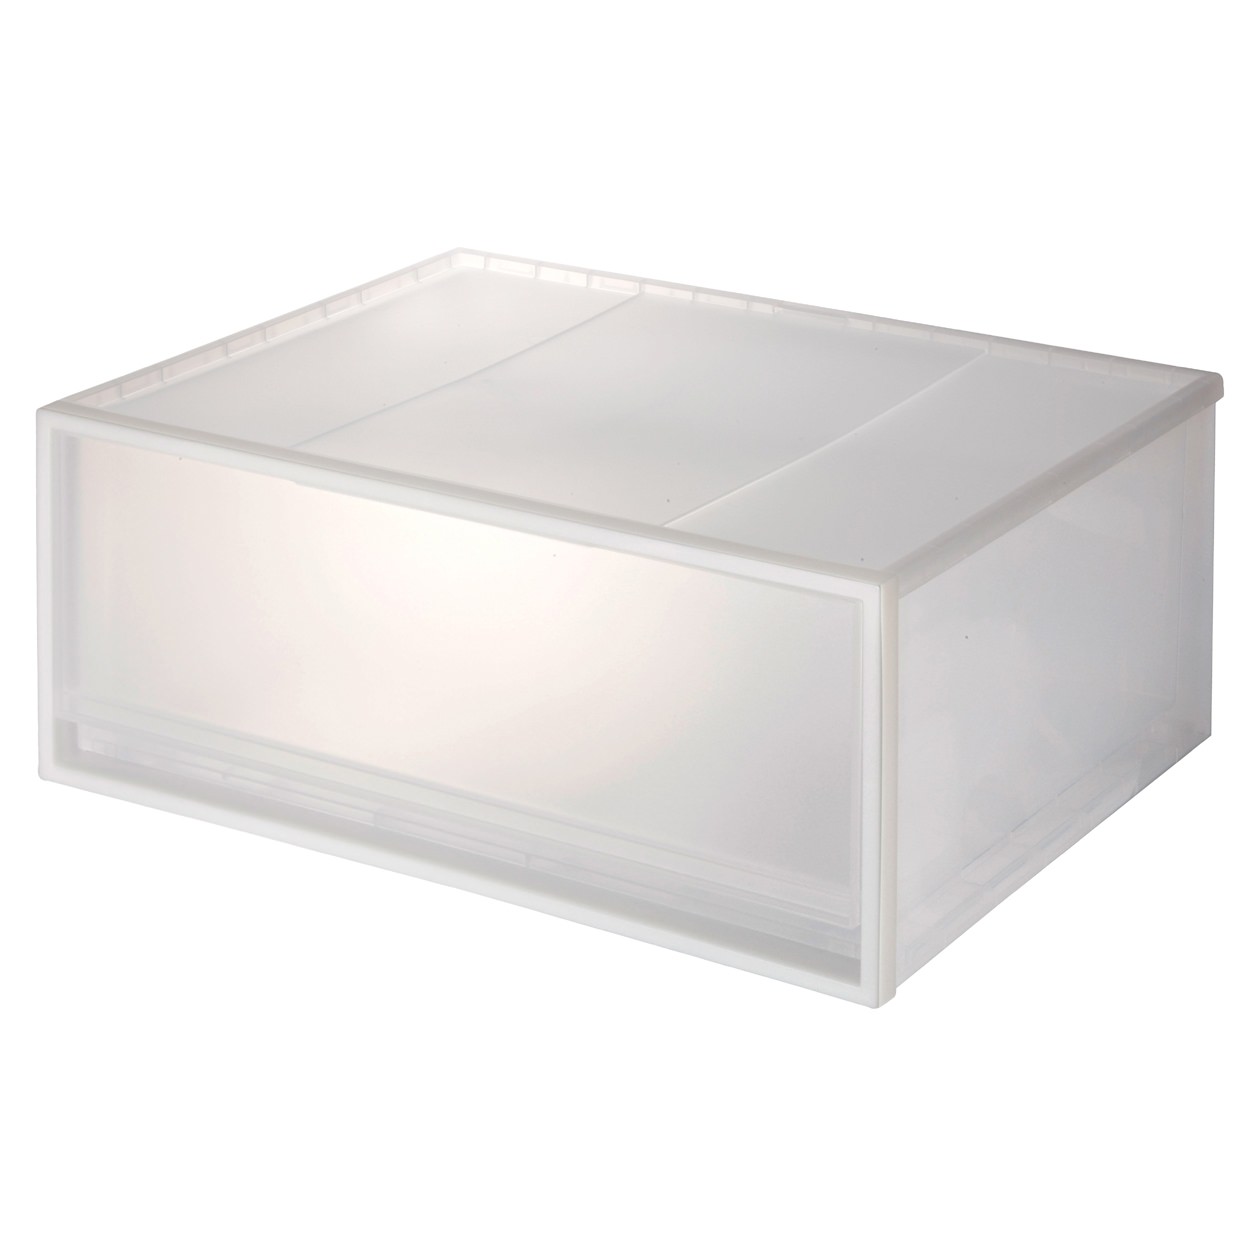 PP Storage Box - 55 x 44.5 M